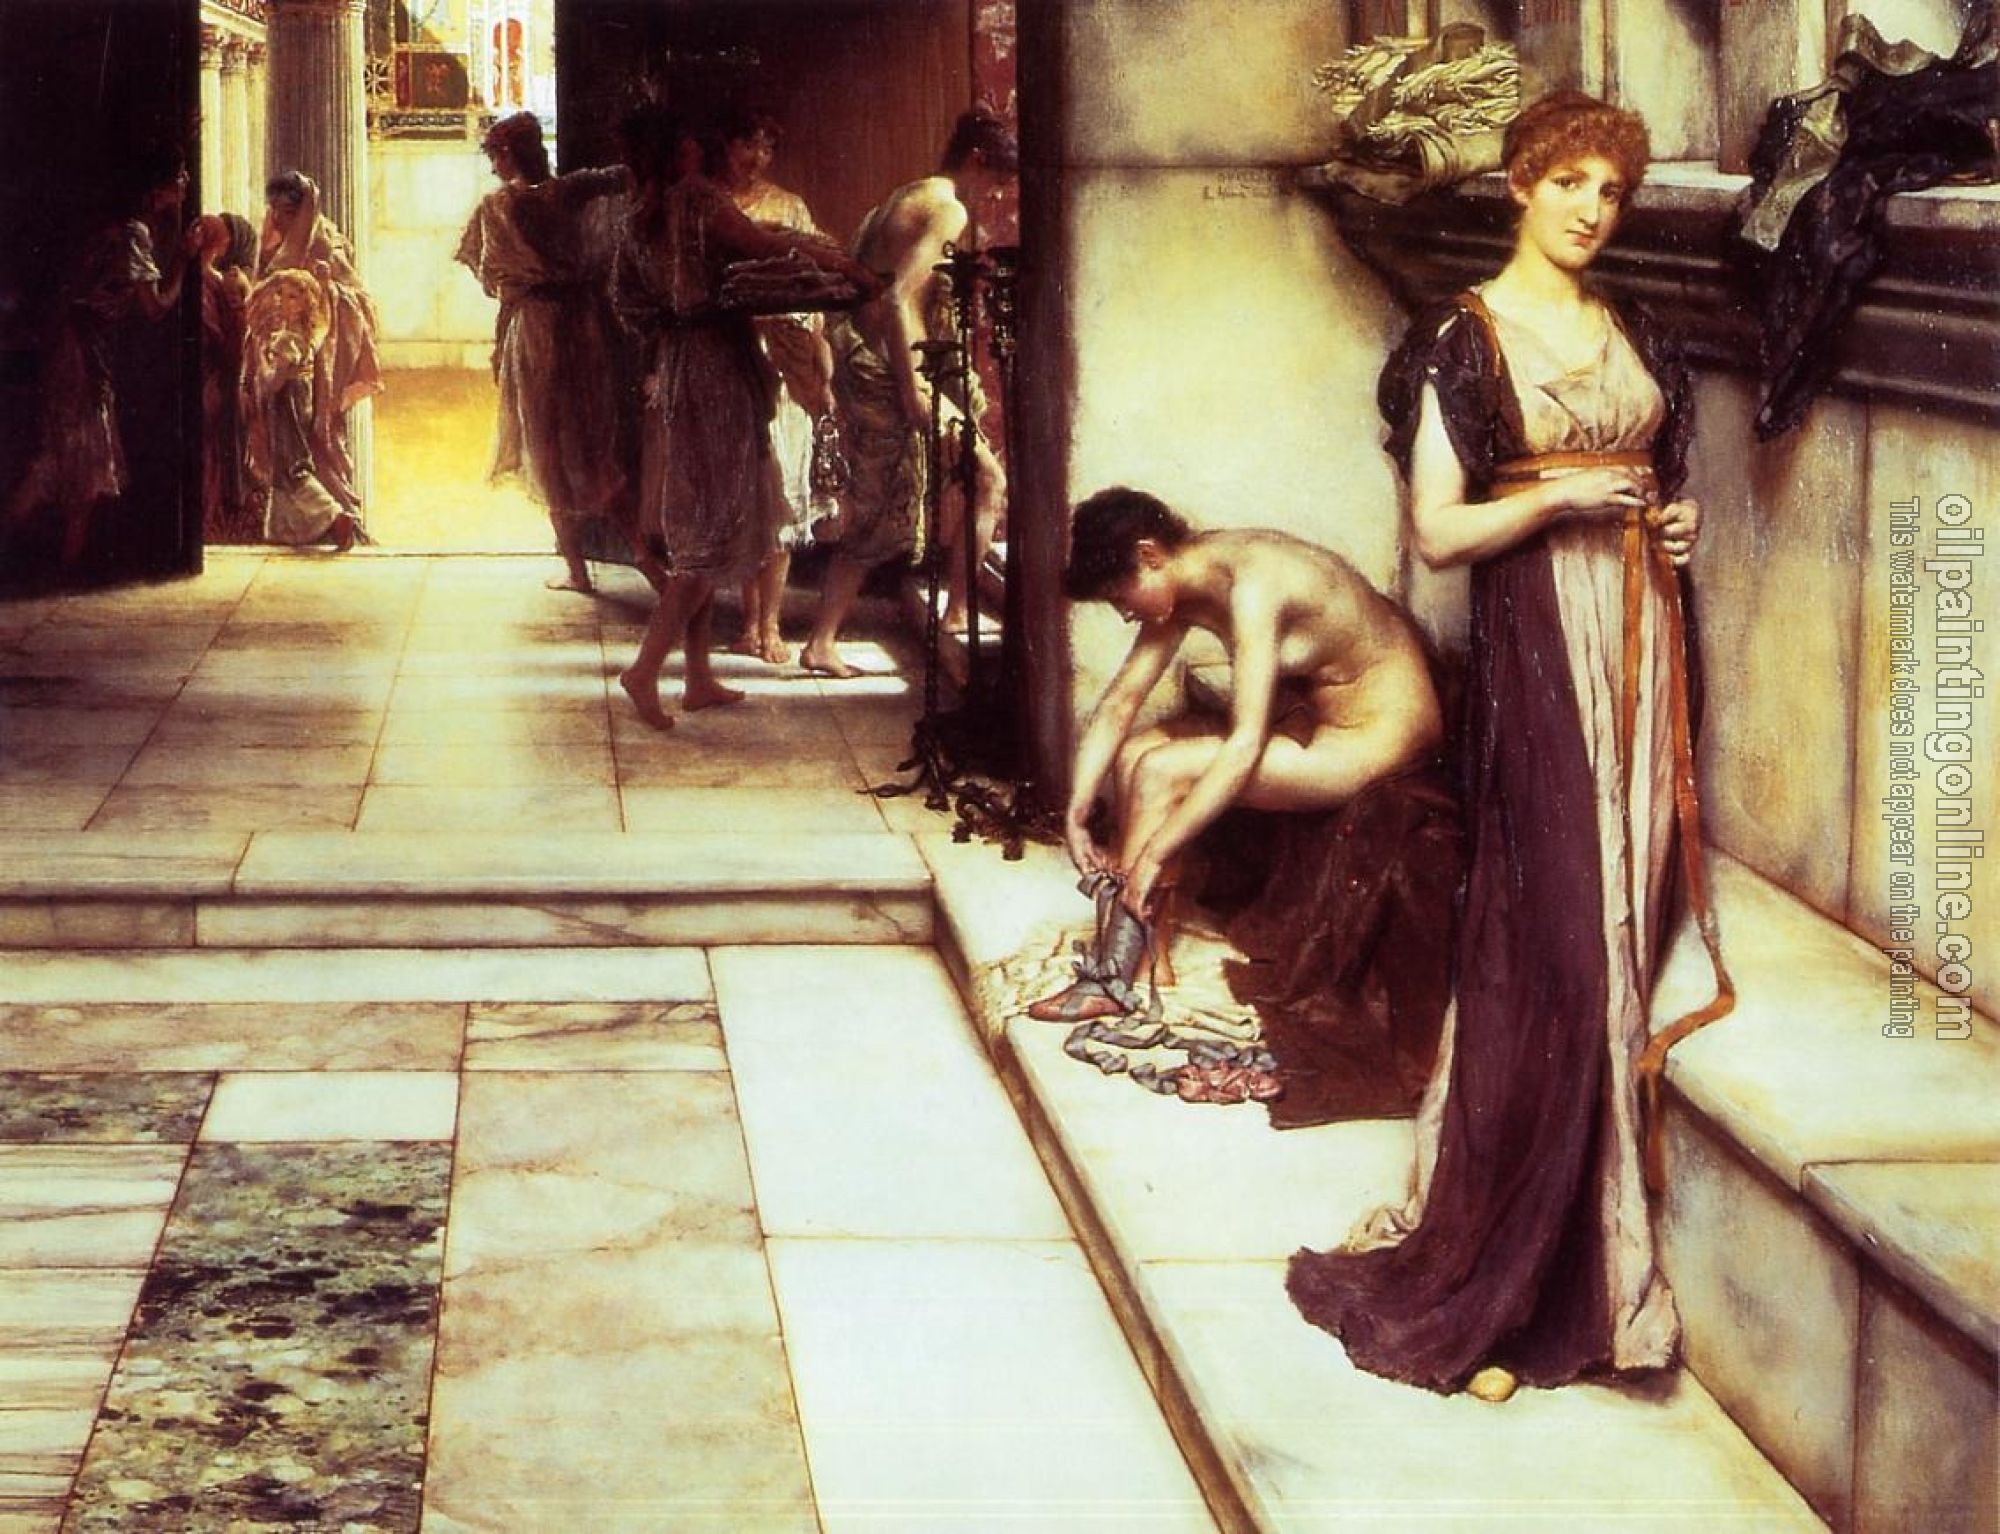 Alma-Tadema, Sir Lawrence - The Apodyterium